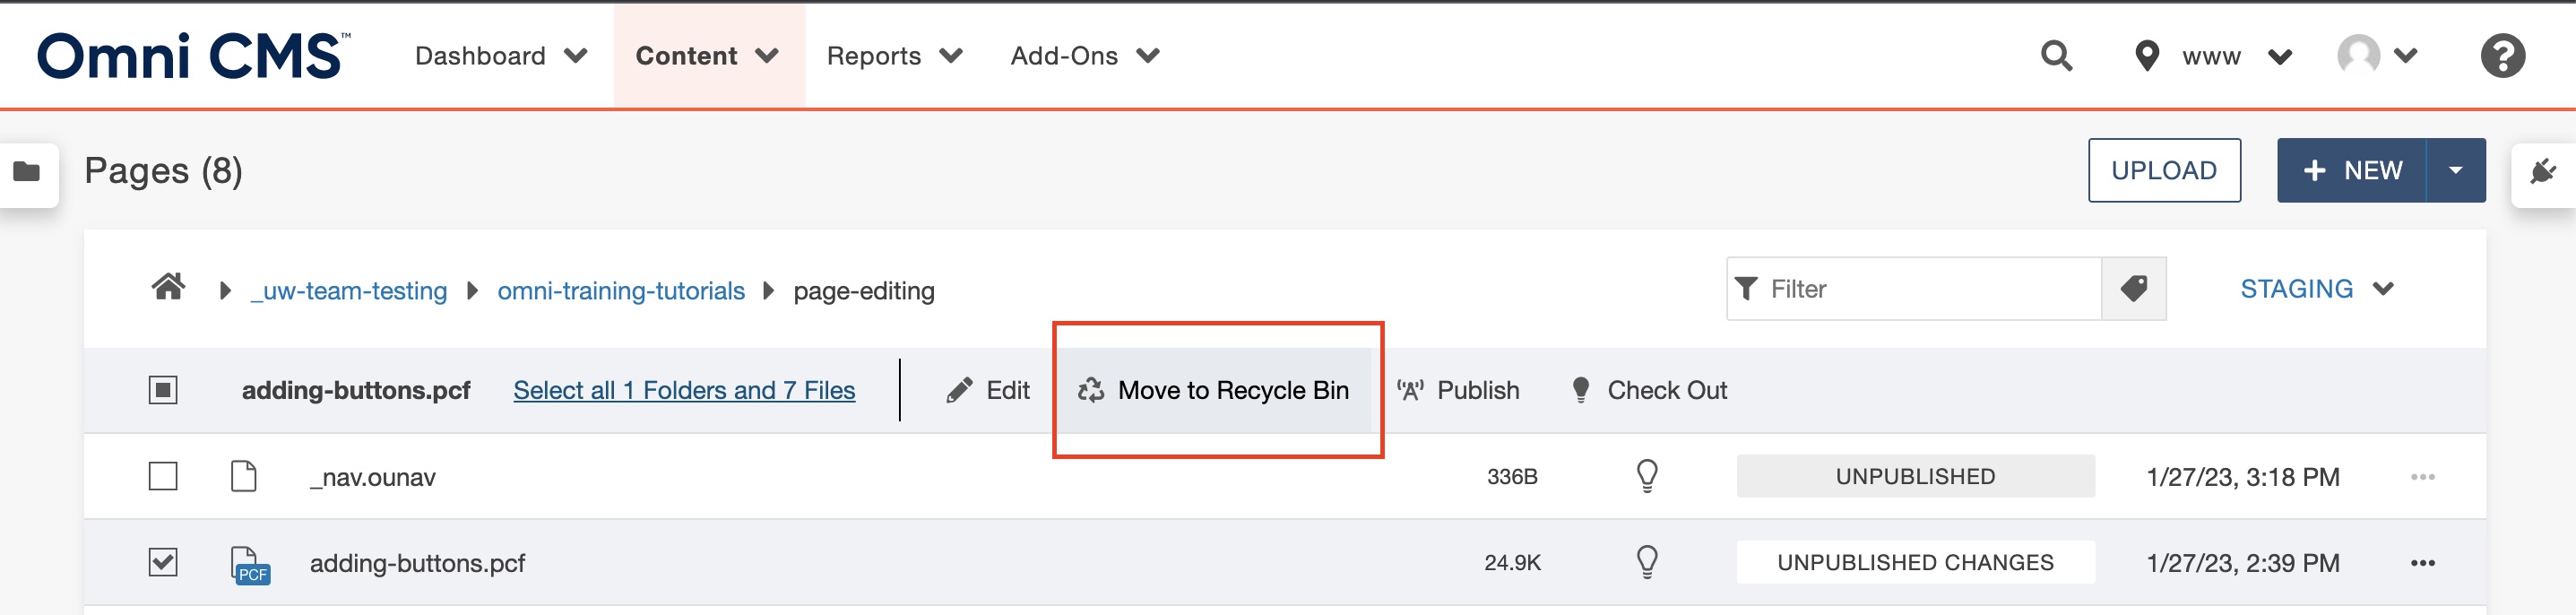 How to move to recycle bin screenshot